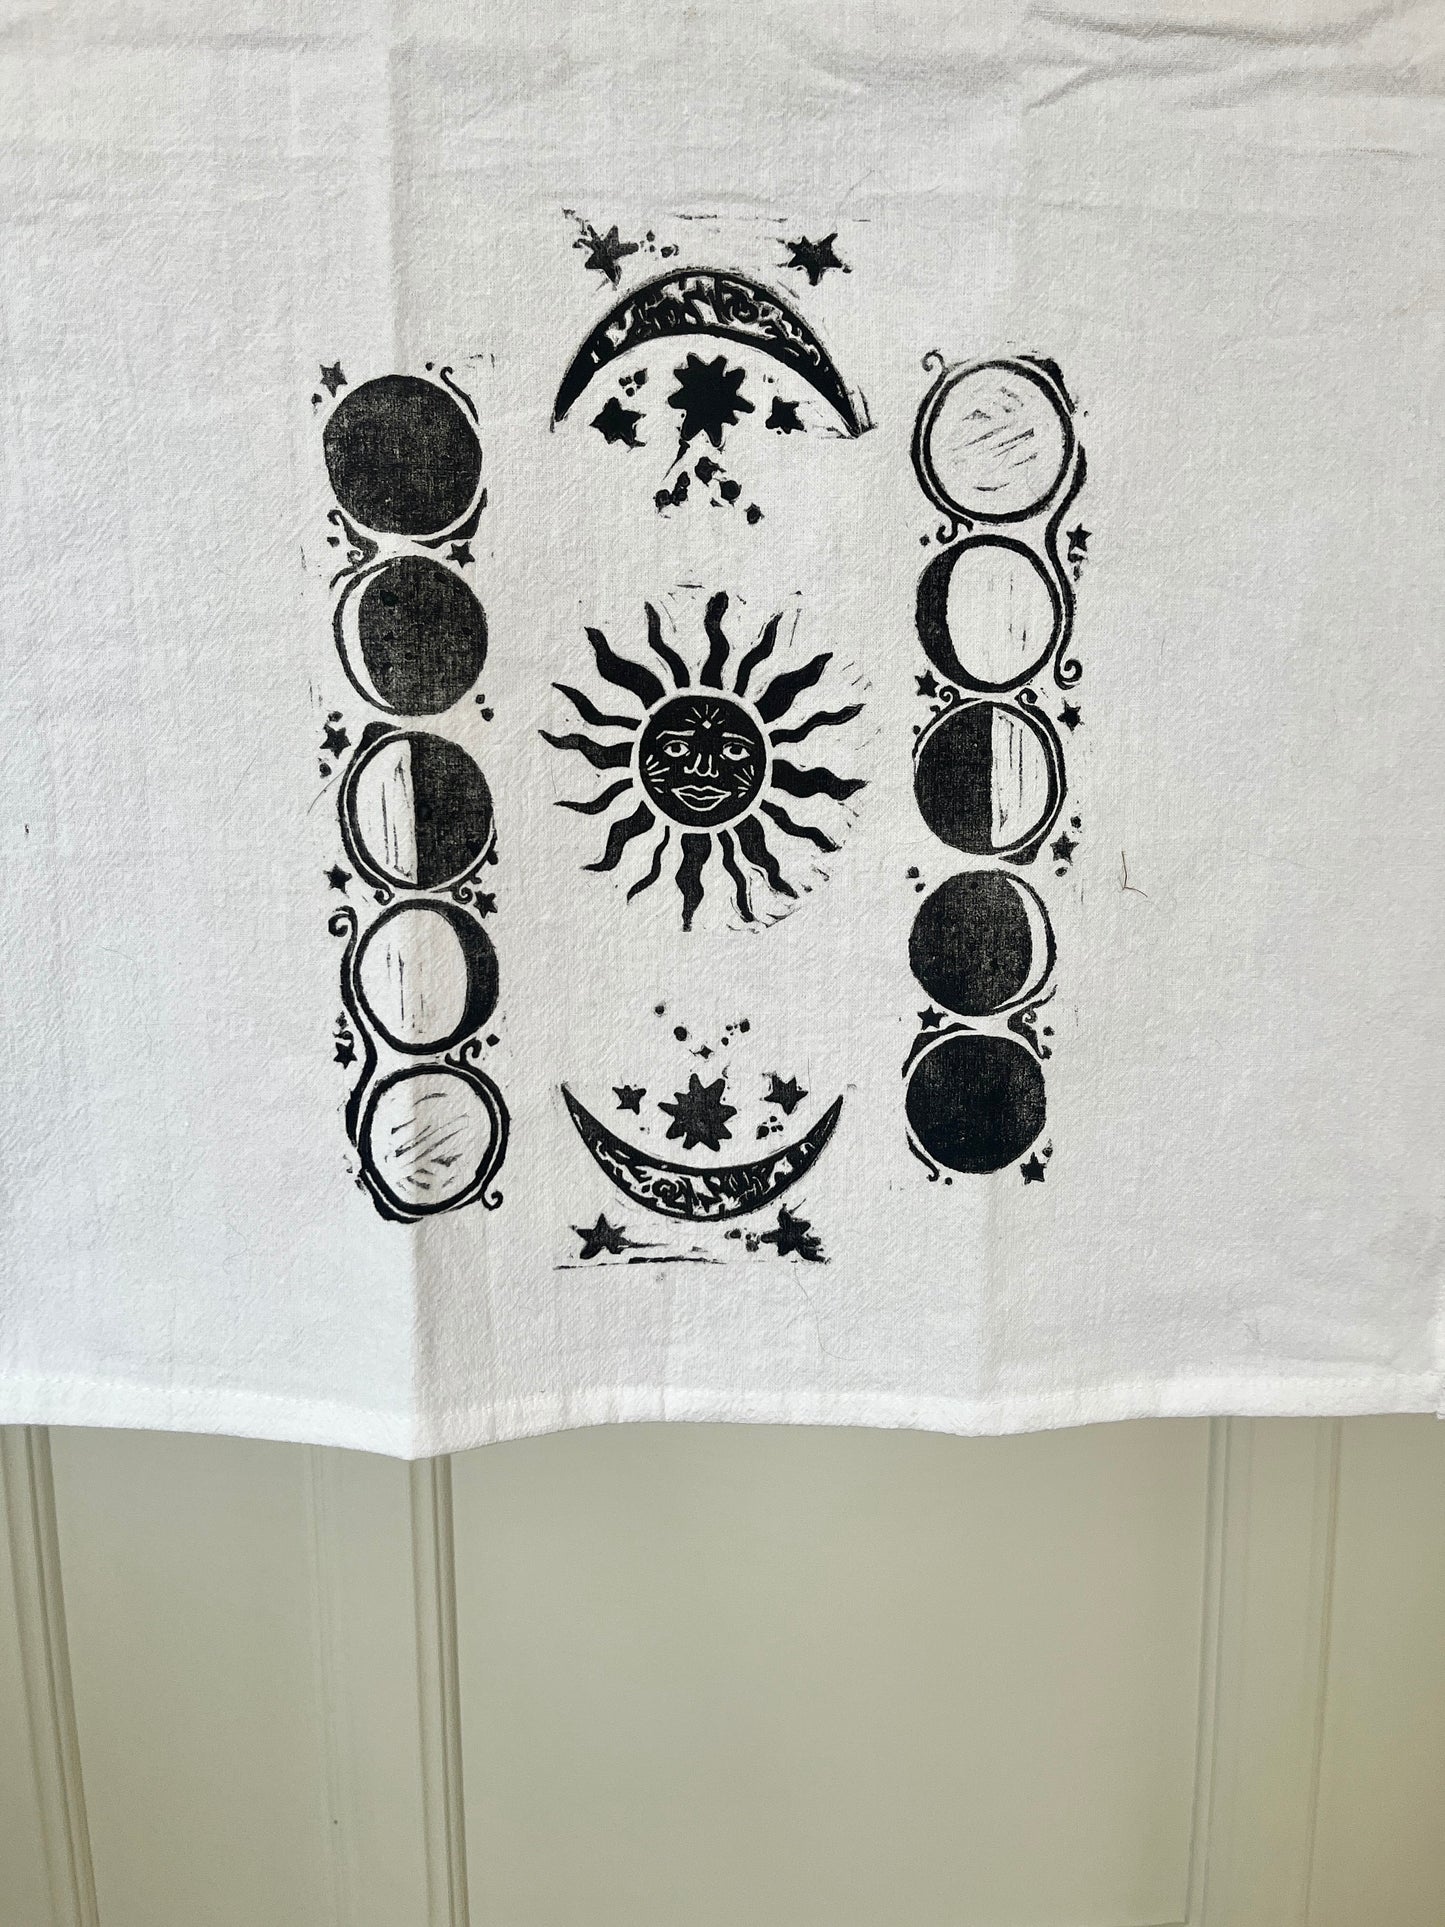 Sun and Moon Tea Towel Design